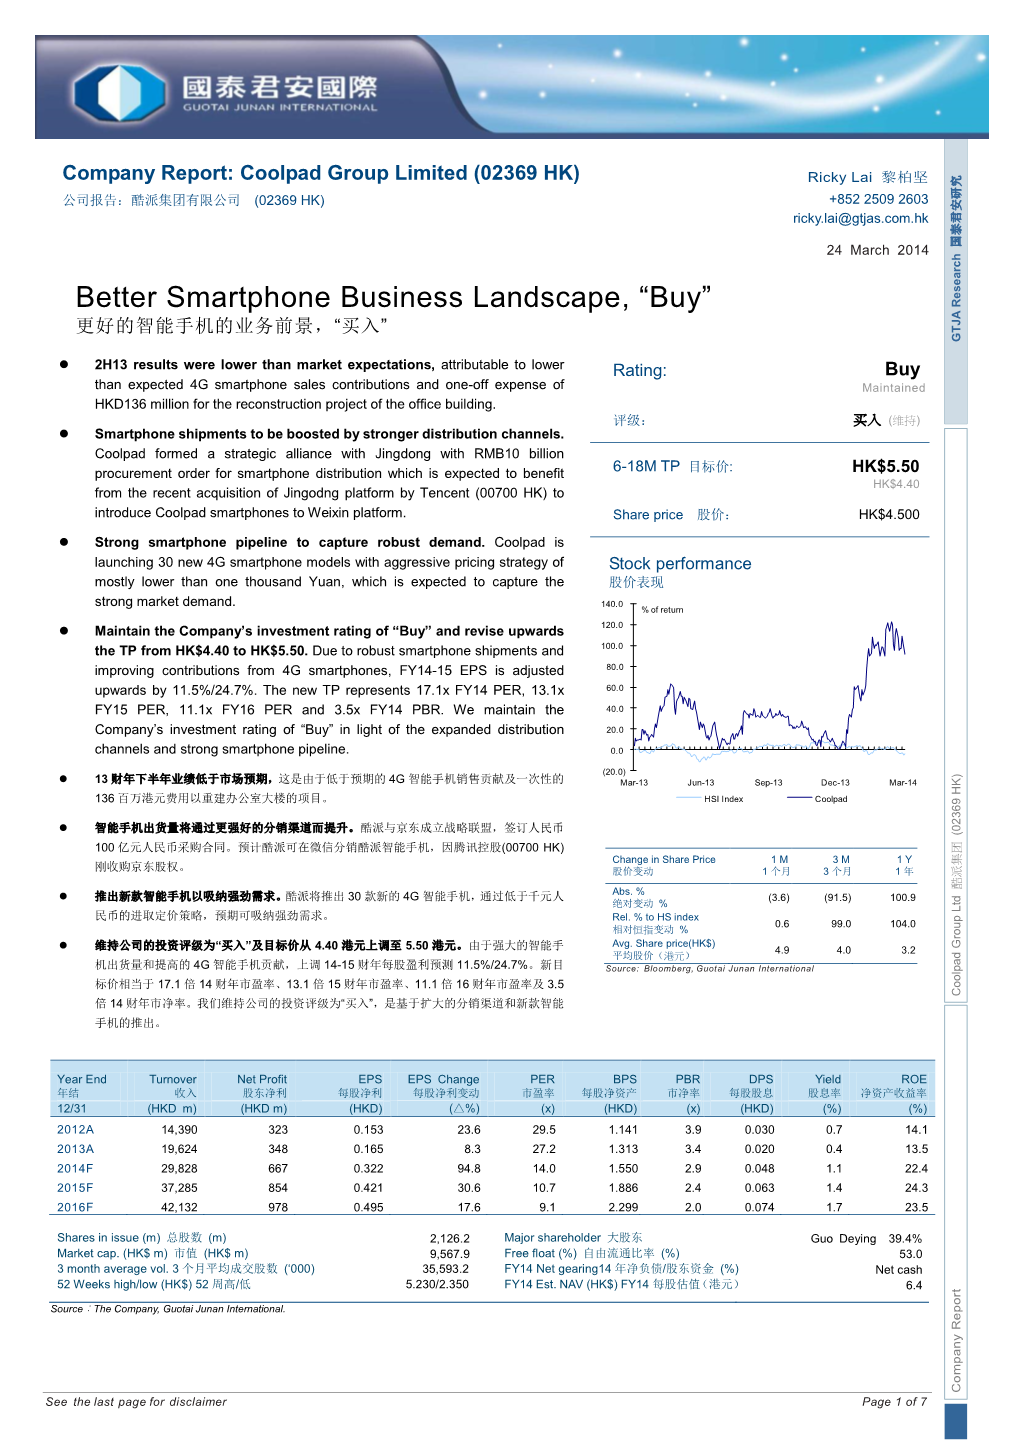 Company Report: Sinotrans Shipping (00368